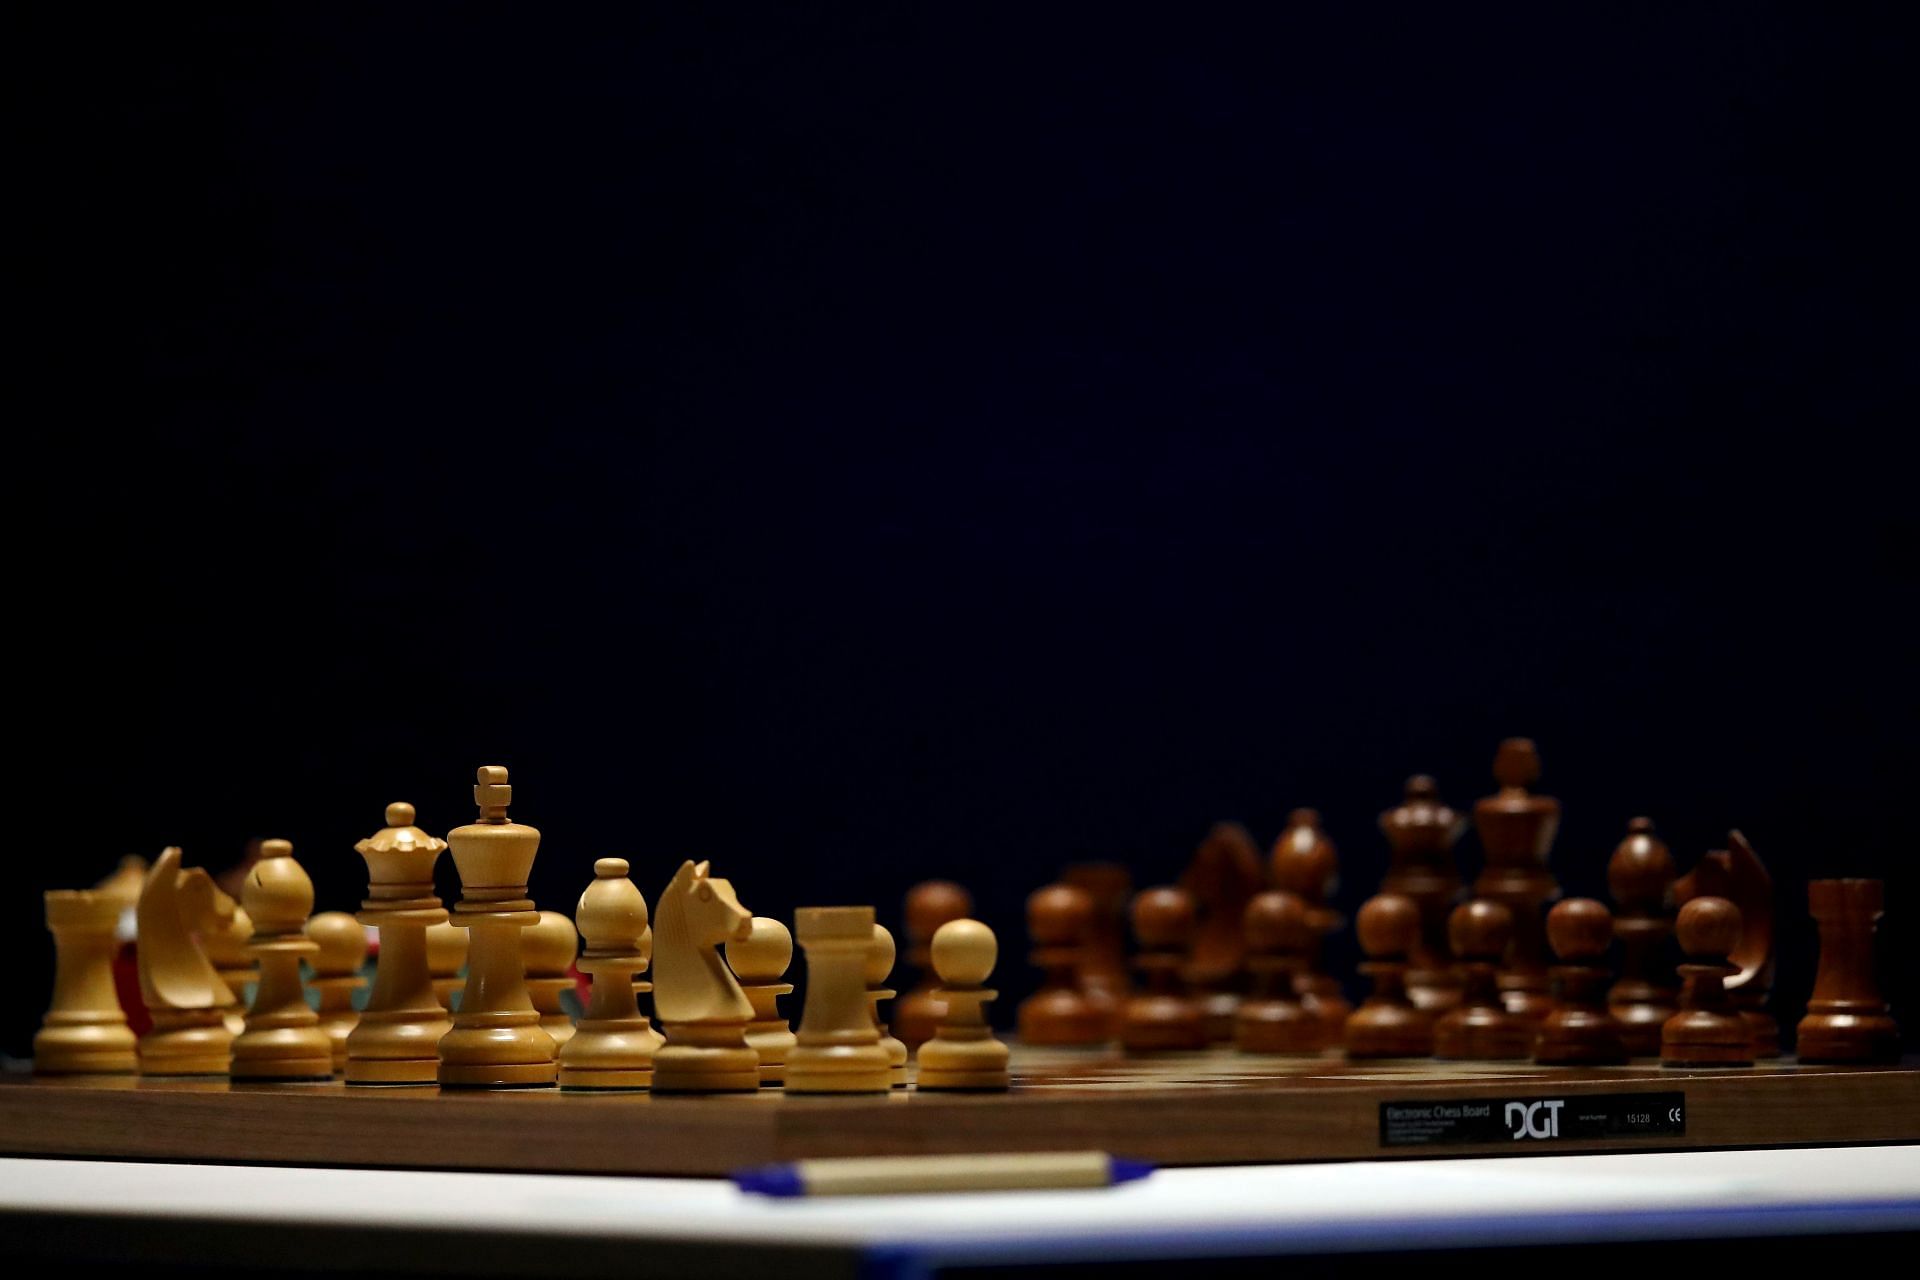 Tata Steel Chess Tournament 2021